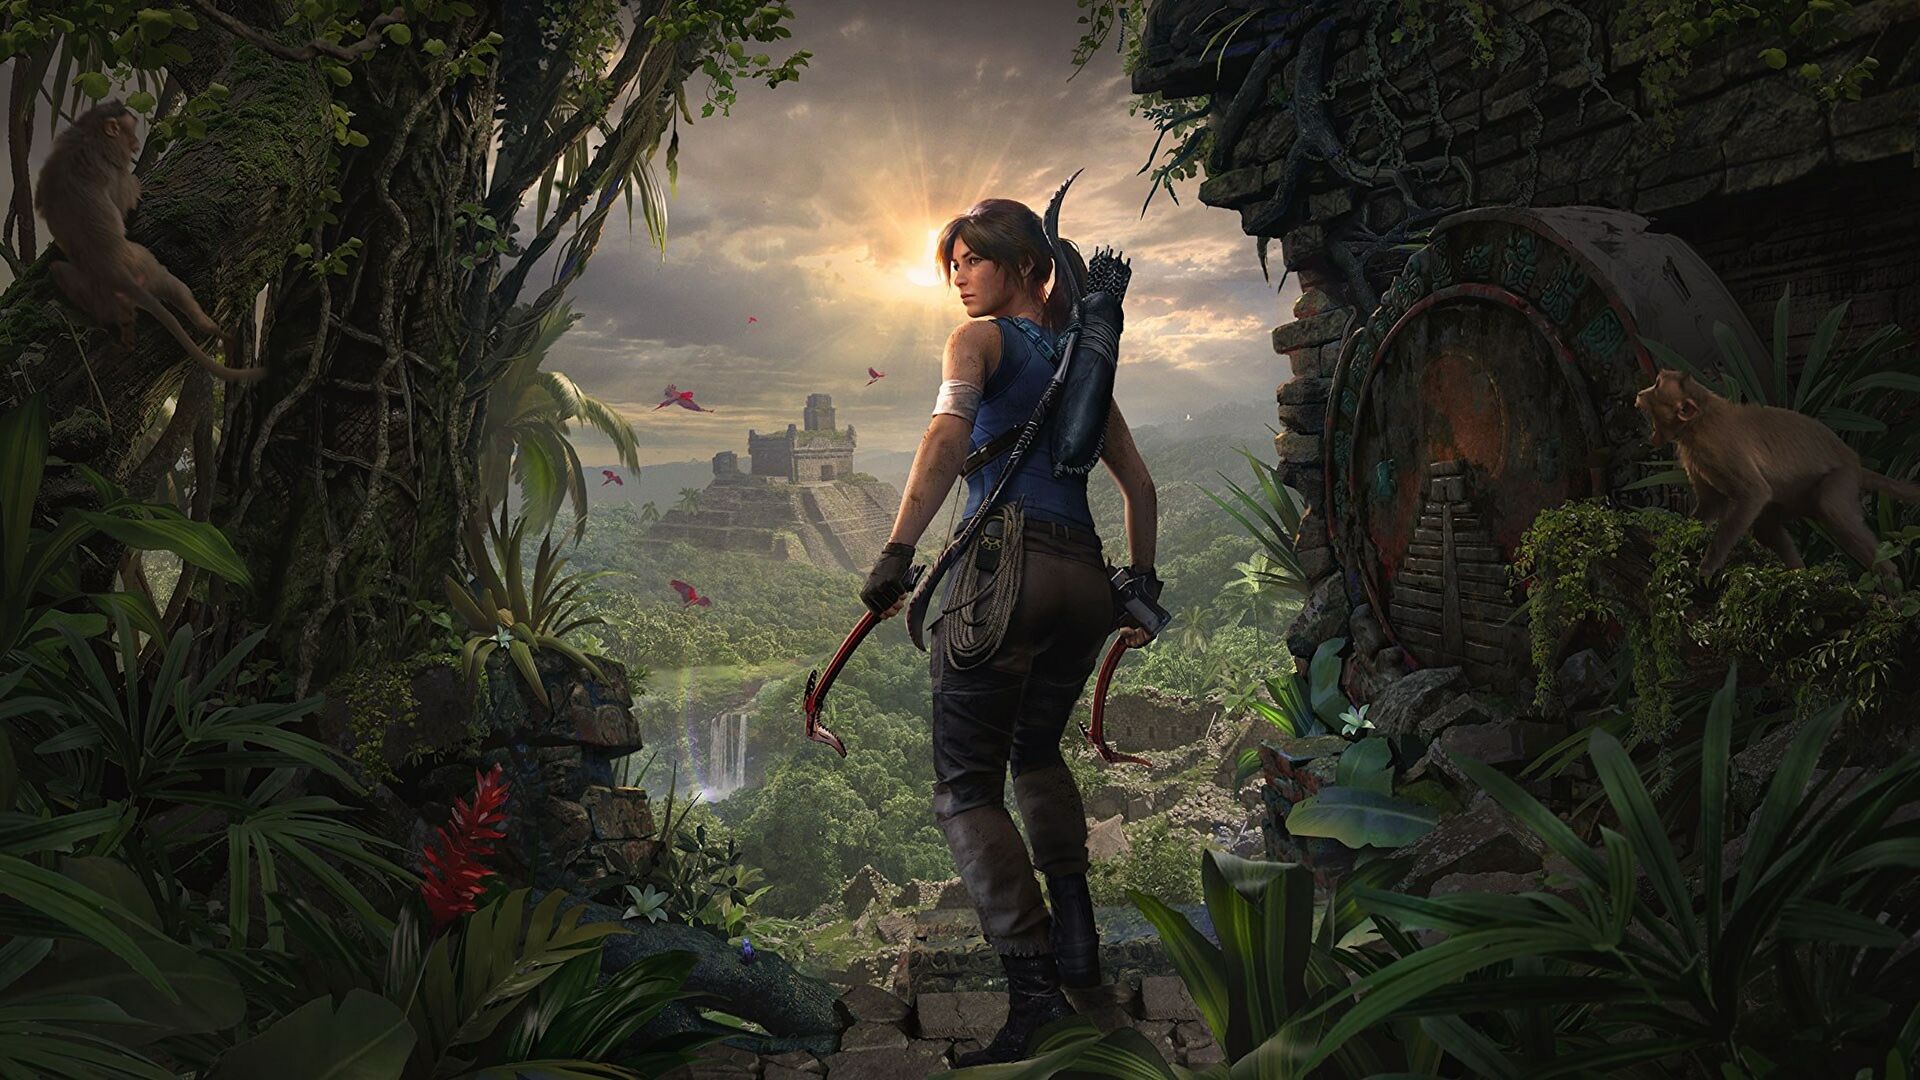 Phoebe “Fleabag” Waller-Bridge is writing a Tomb Raider TV show for Amazon